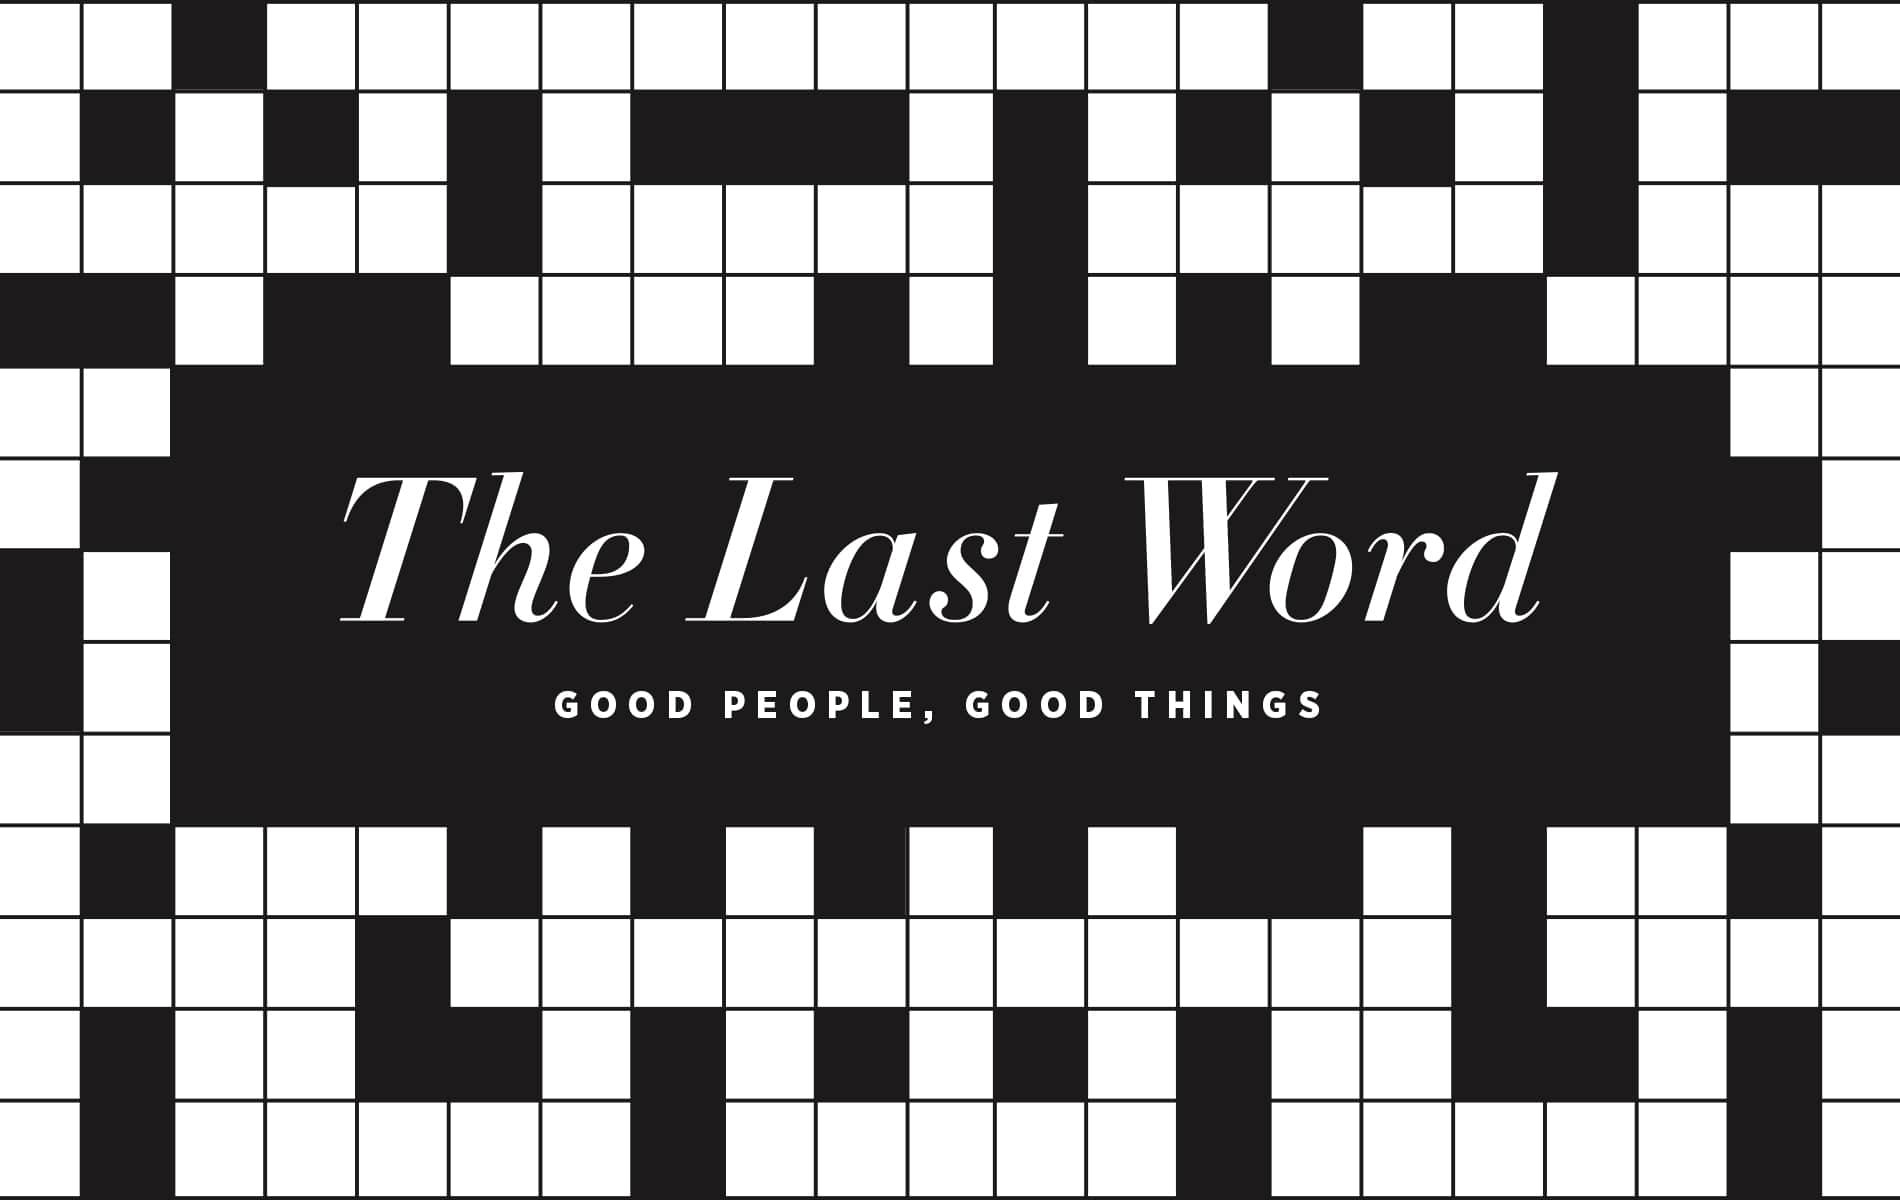 VIE Magazine November 2019 Goodness Issue, Crossword Puzzle